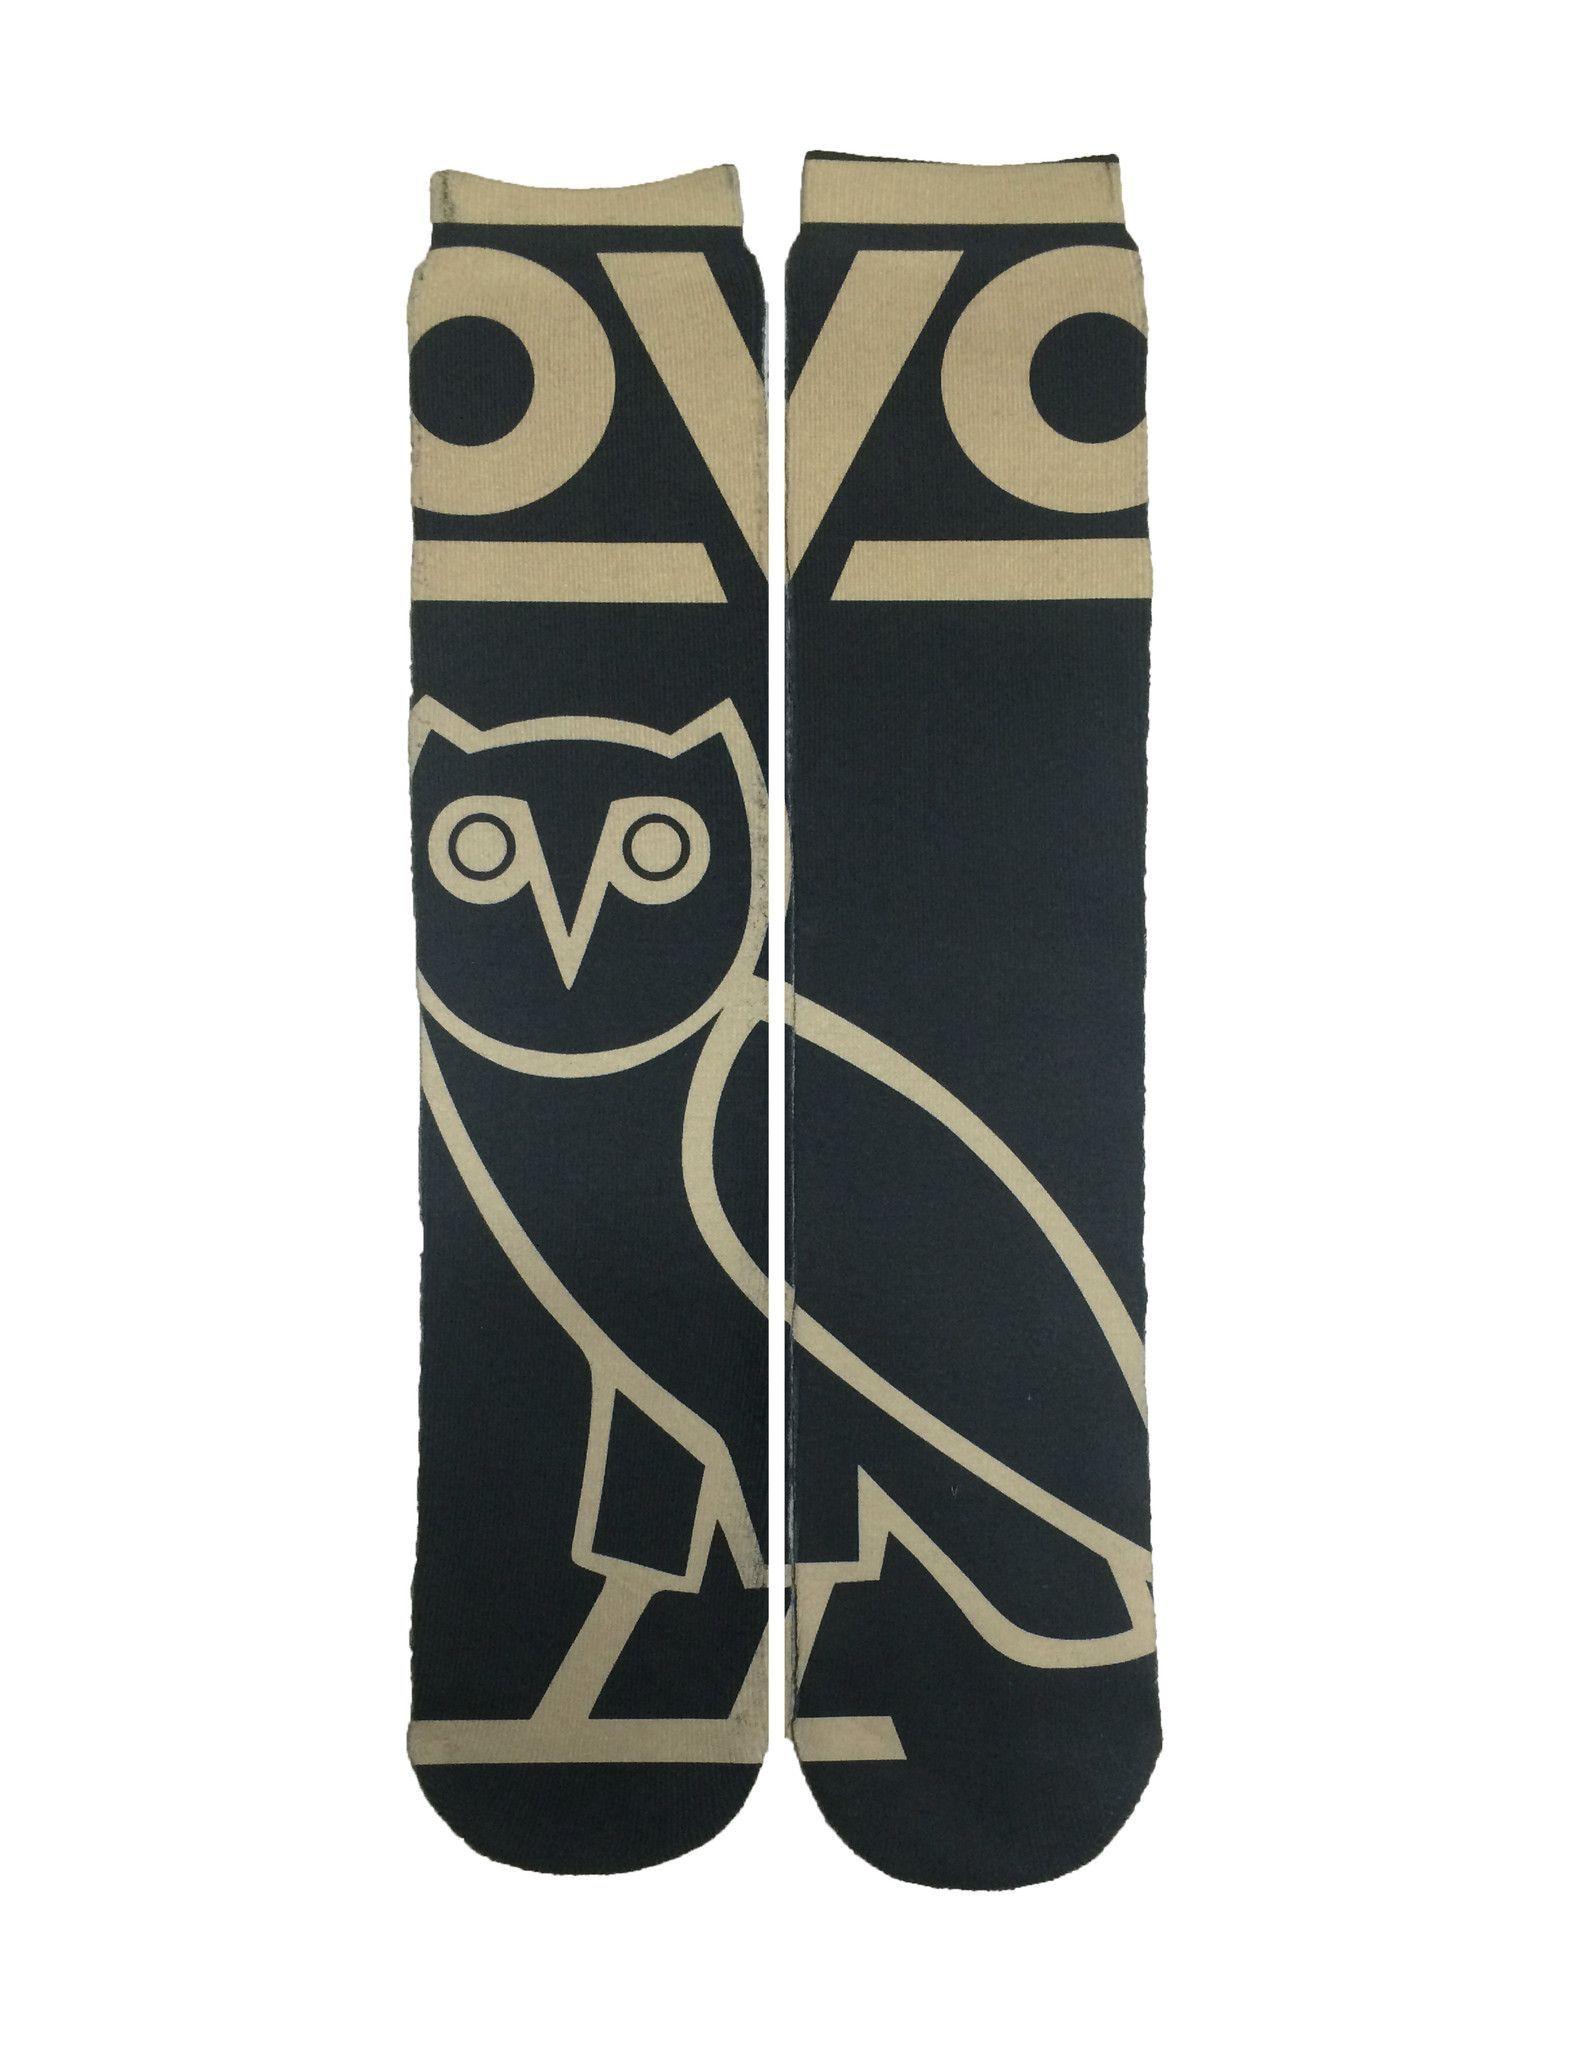 Drake OVO Owl Logo - Drake OVO Classic Owl Logo Socks | Fashion | Socks, Mens fashion ...